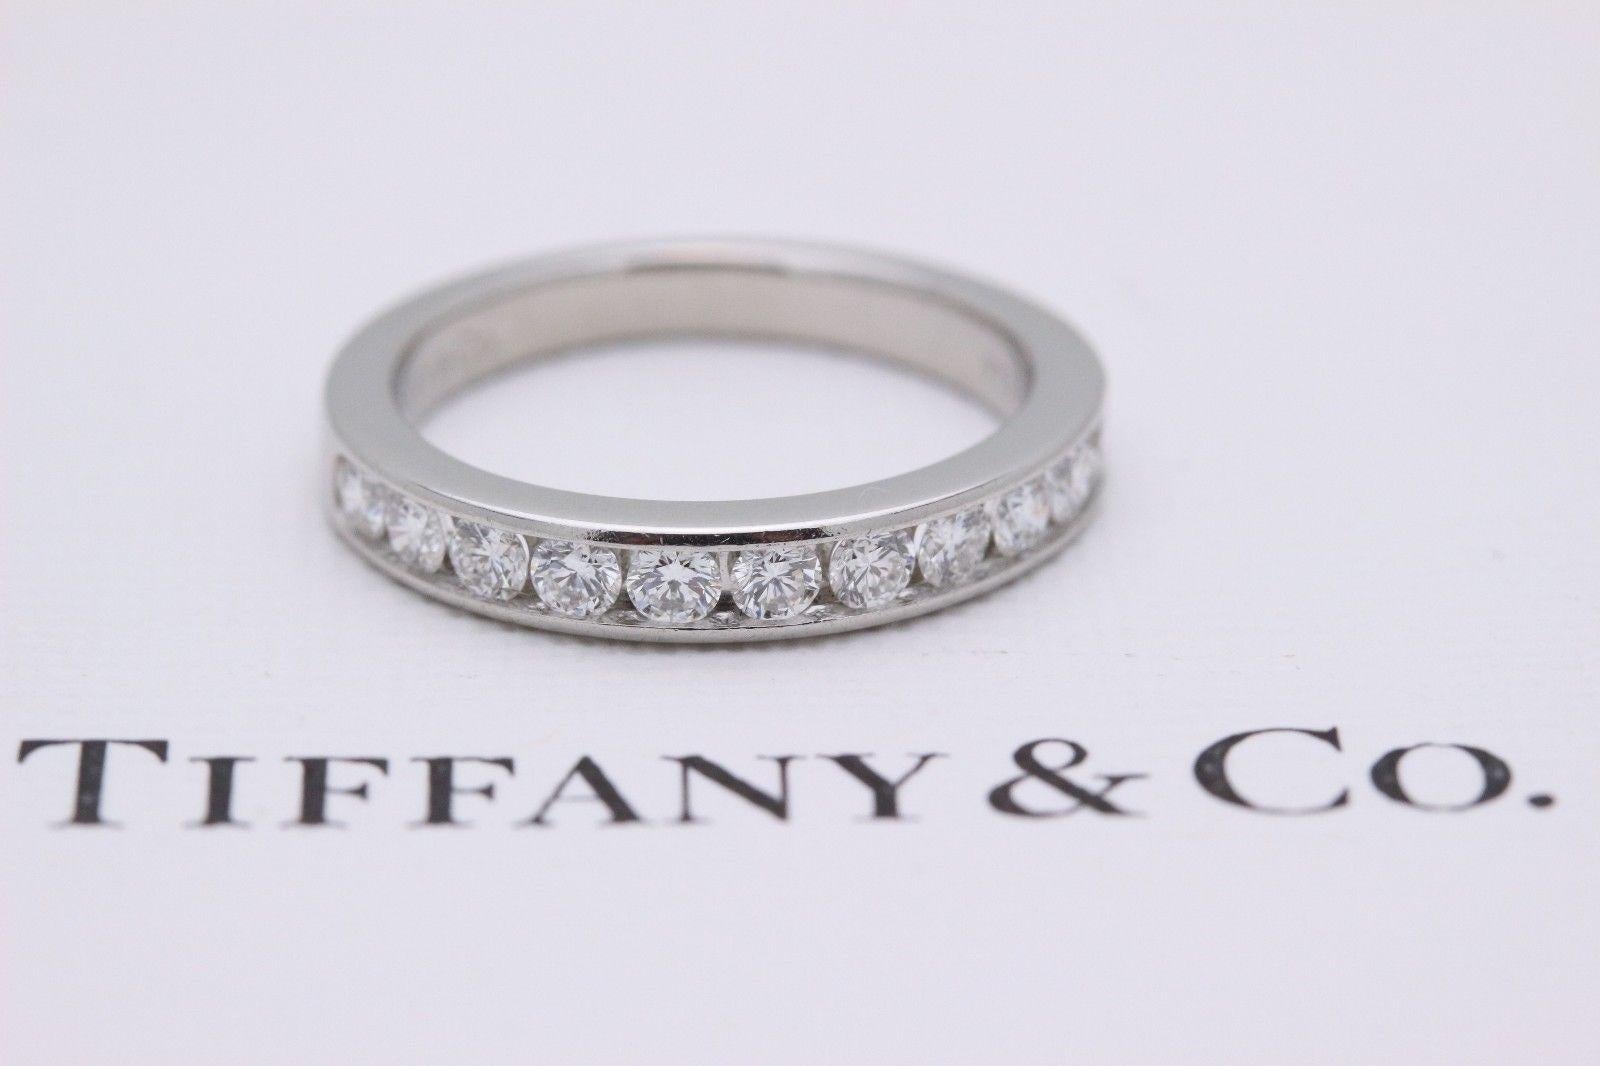 Tiffany & Co.
Style: Half Circle Diamond Wedding Band
Sku Number:  16183296
Size:  5.5 - sizable
Metal:  Platinum PT950
Total Carat Weight:  0.24 Cts.
Diamond Shape:  Round Brilliant 
Diamond Color & Clarity:  F-G  /  VVS-VS
Hallmark:  